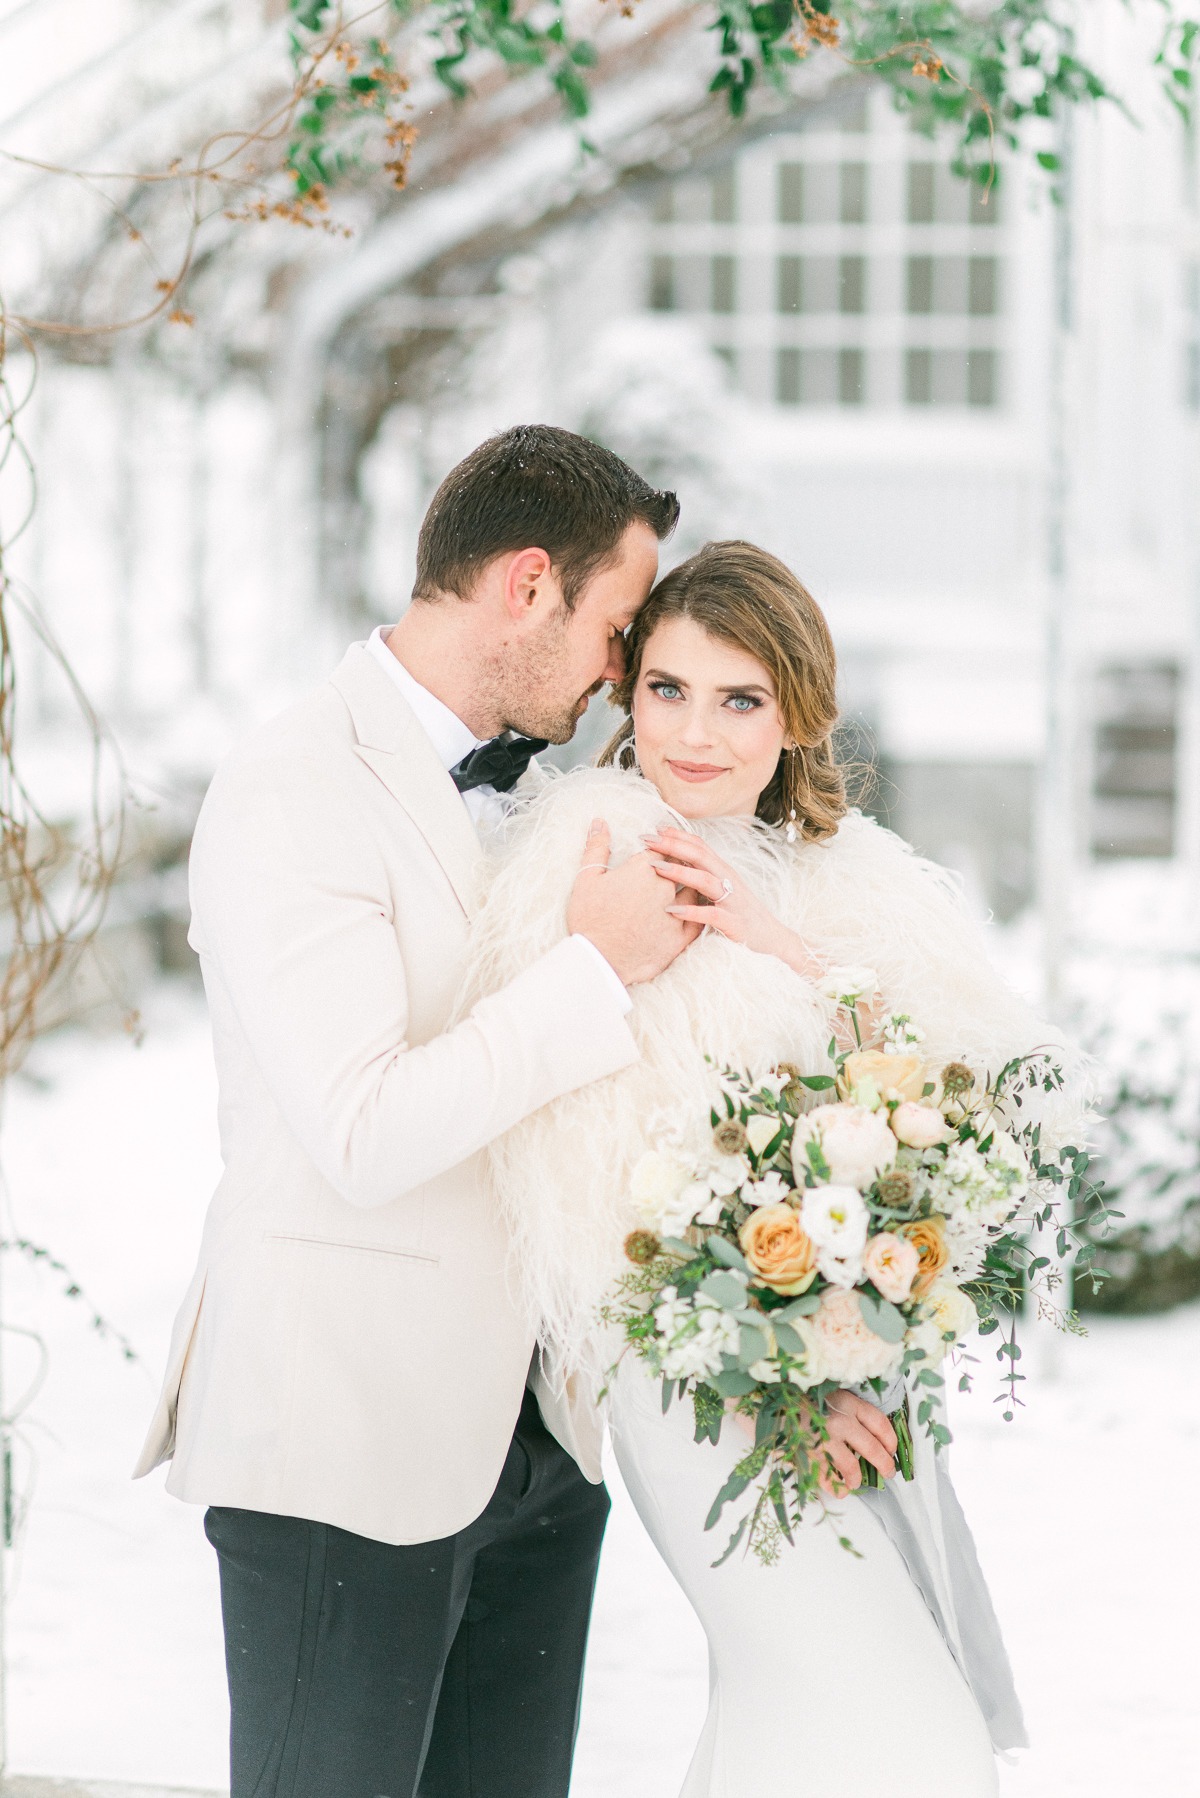 Dreamy Winter Wedding Inspiration in Vermont